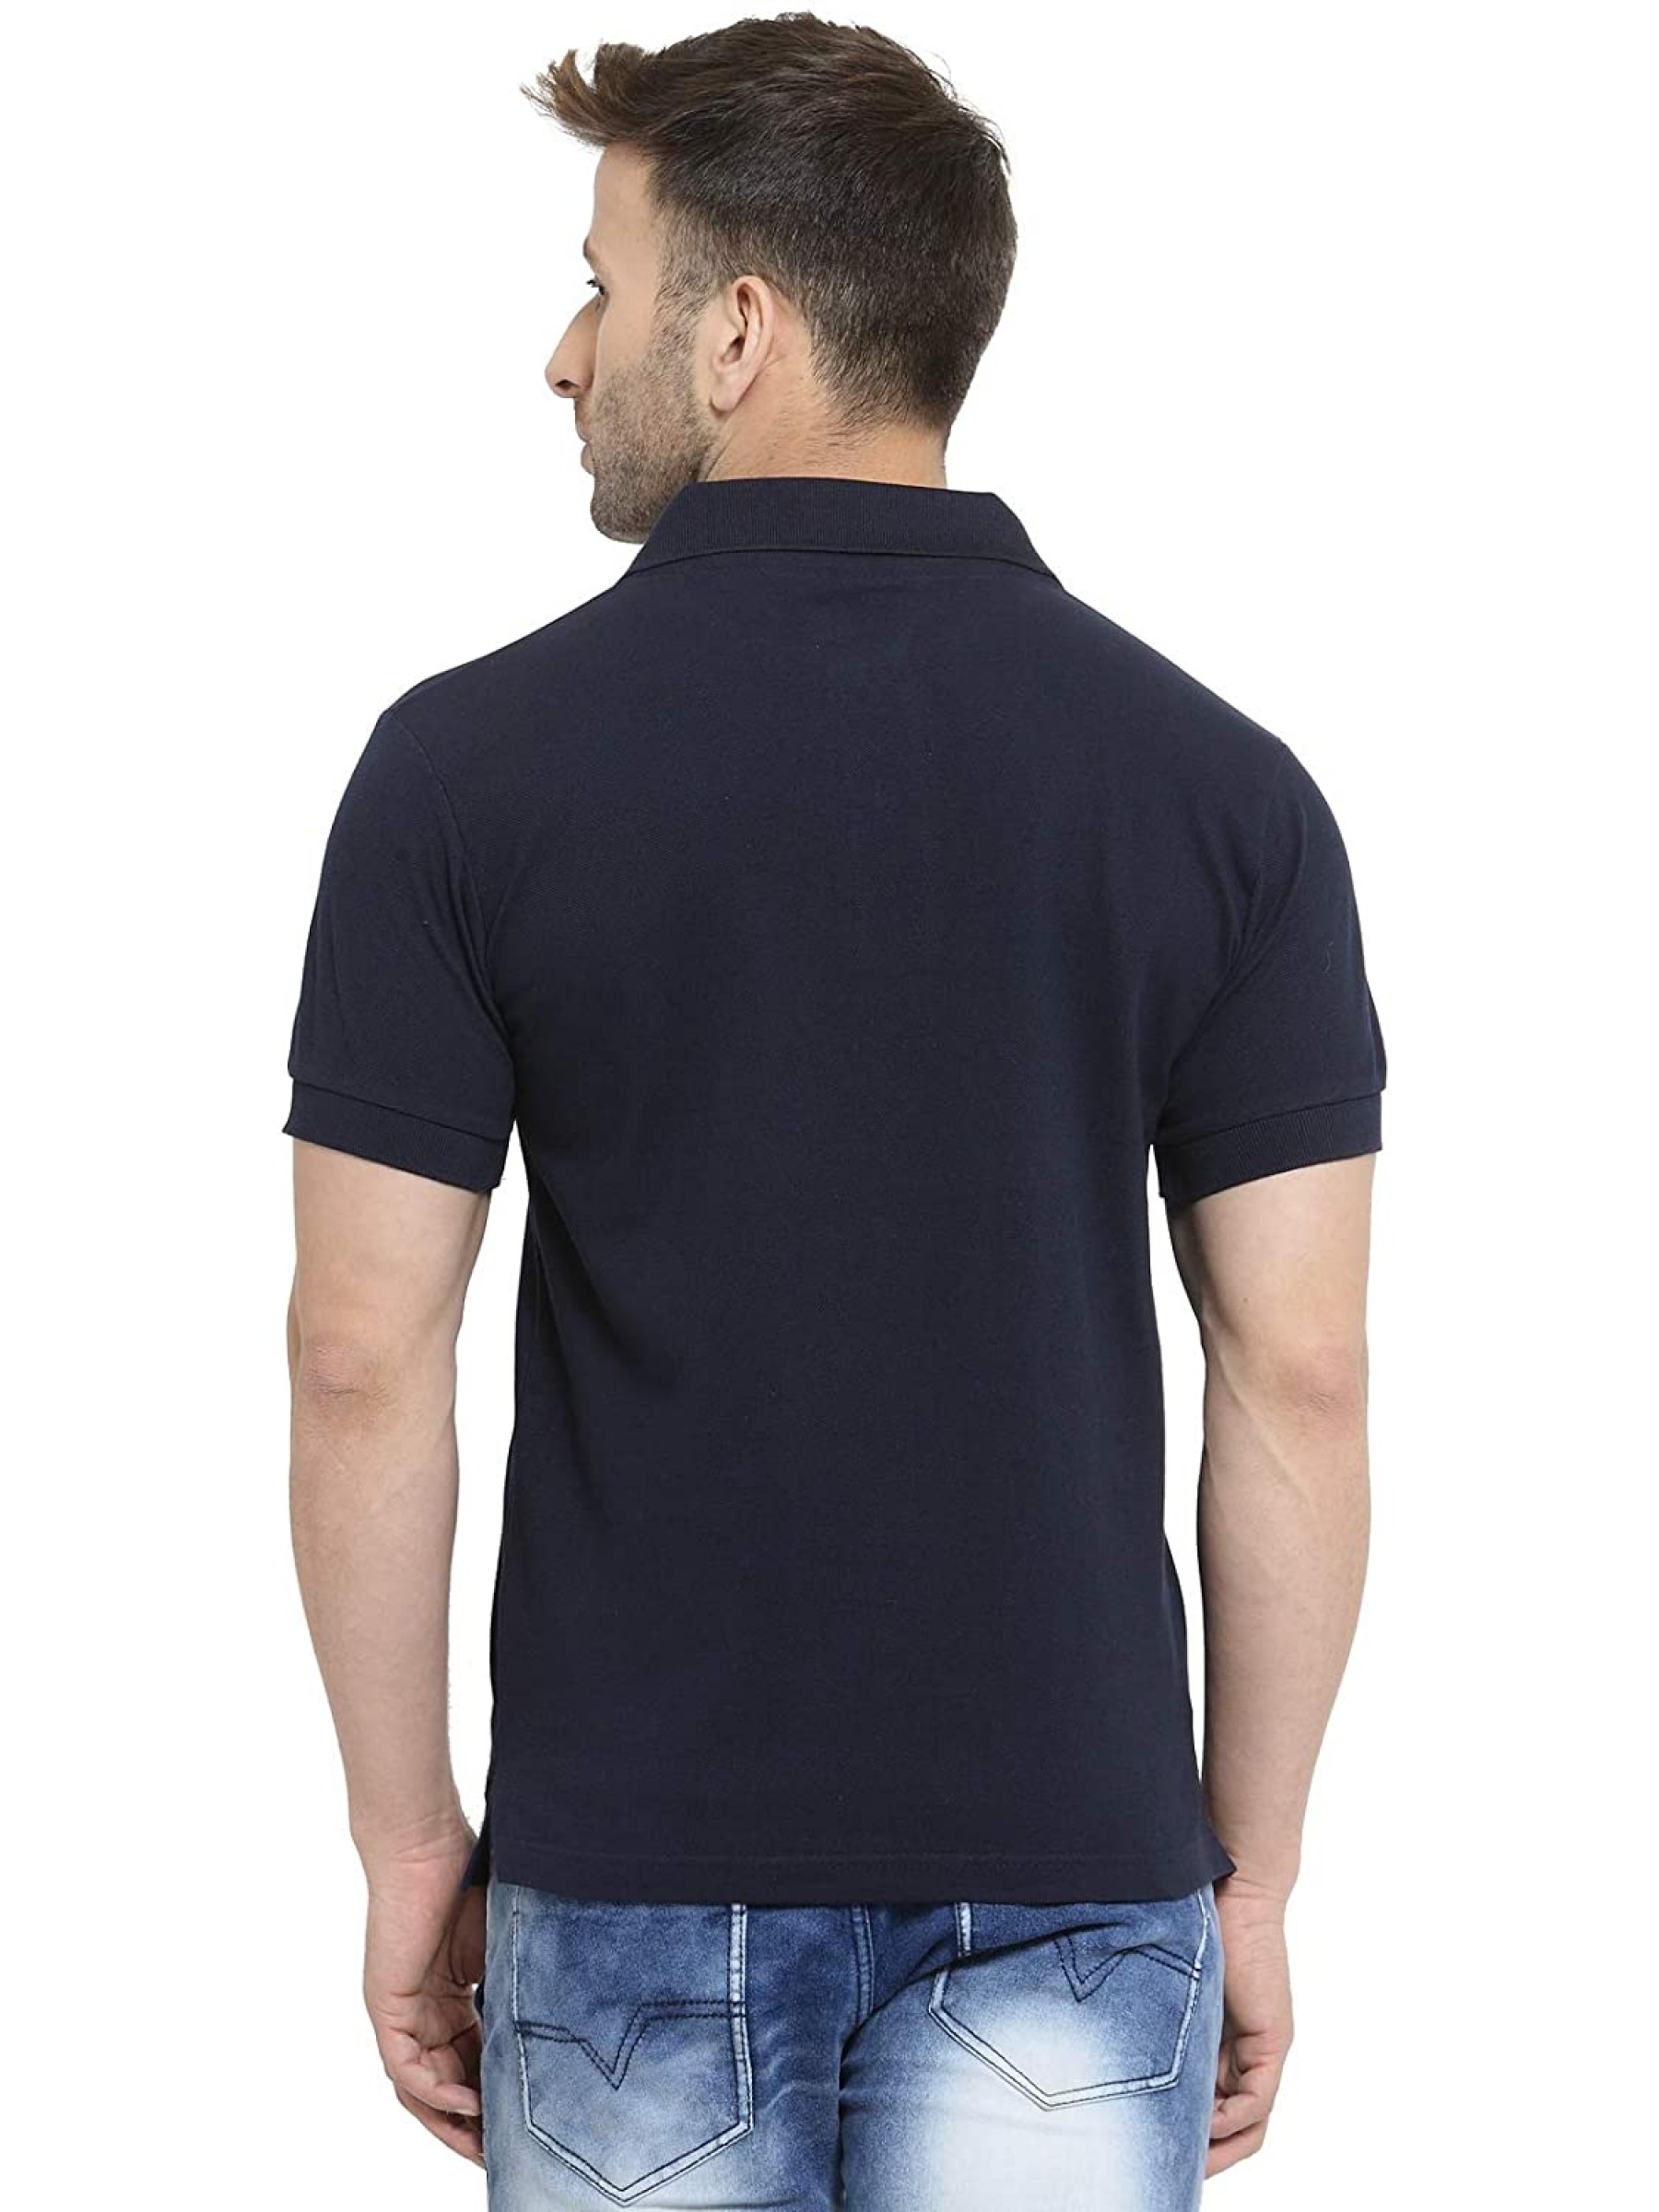 Men's Comfortable Soft Cotton Blend Plain/Solid Polo Neck Collar Half Sleeve Regular Fit T-Shirt